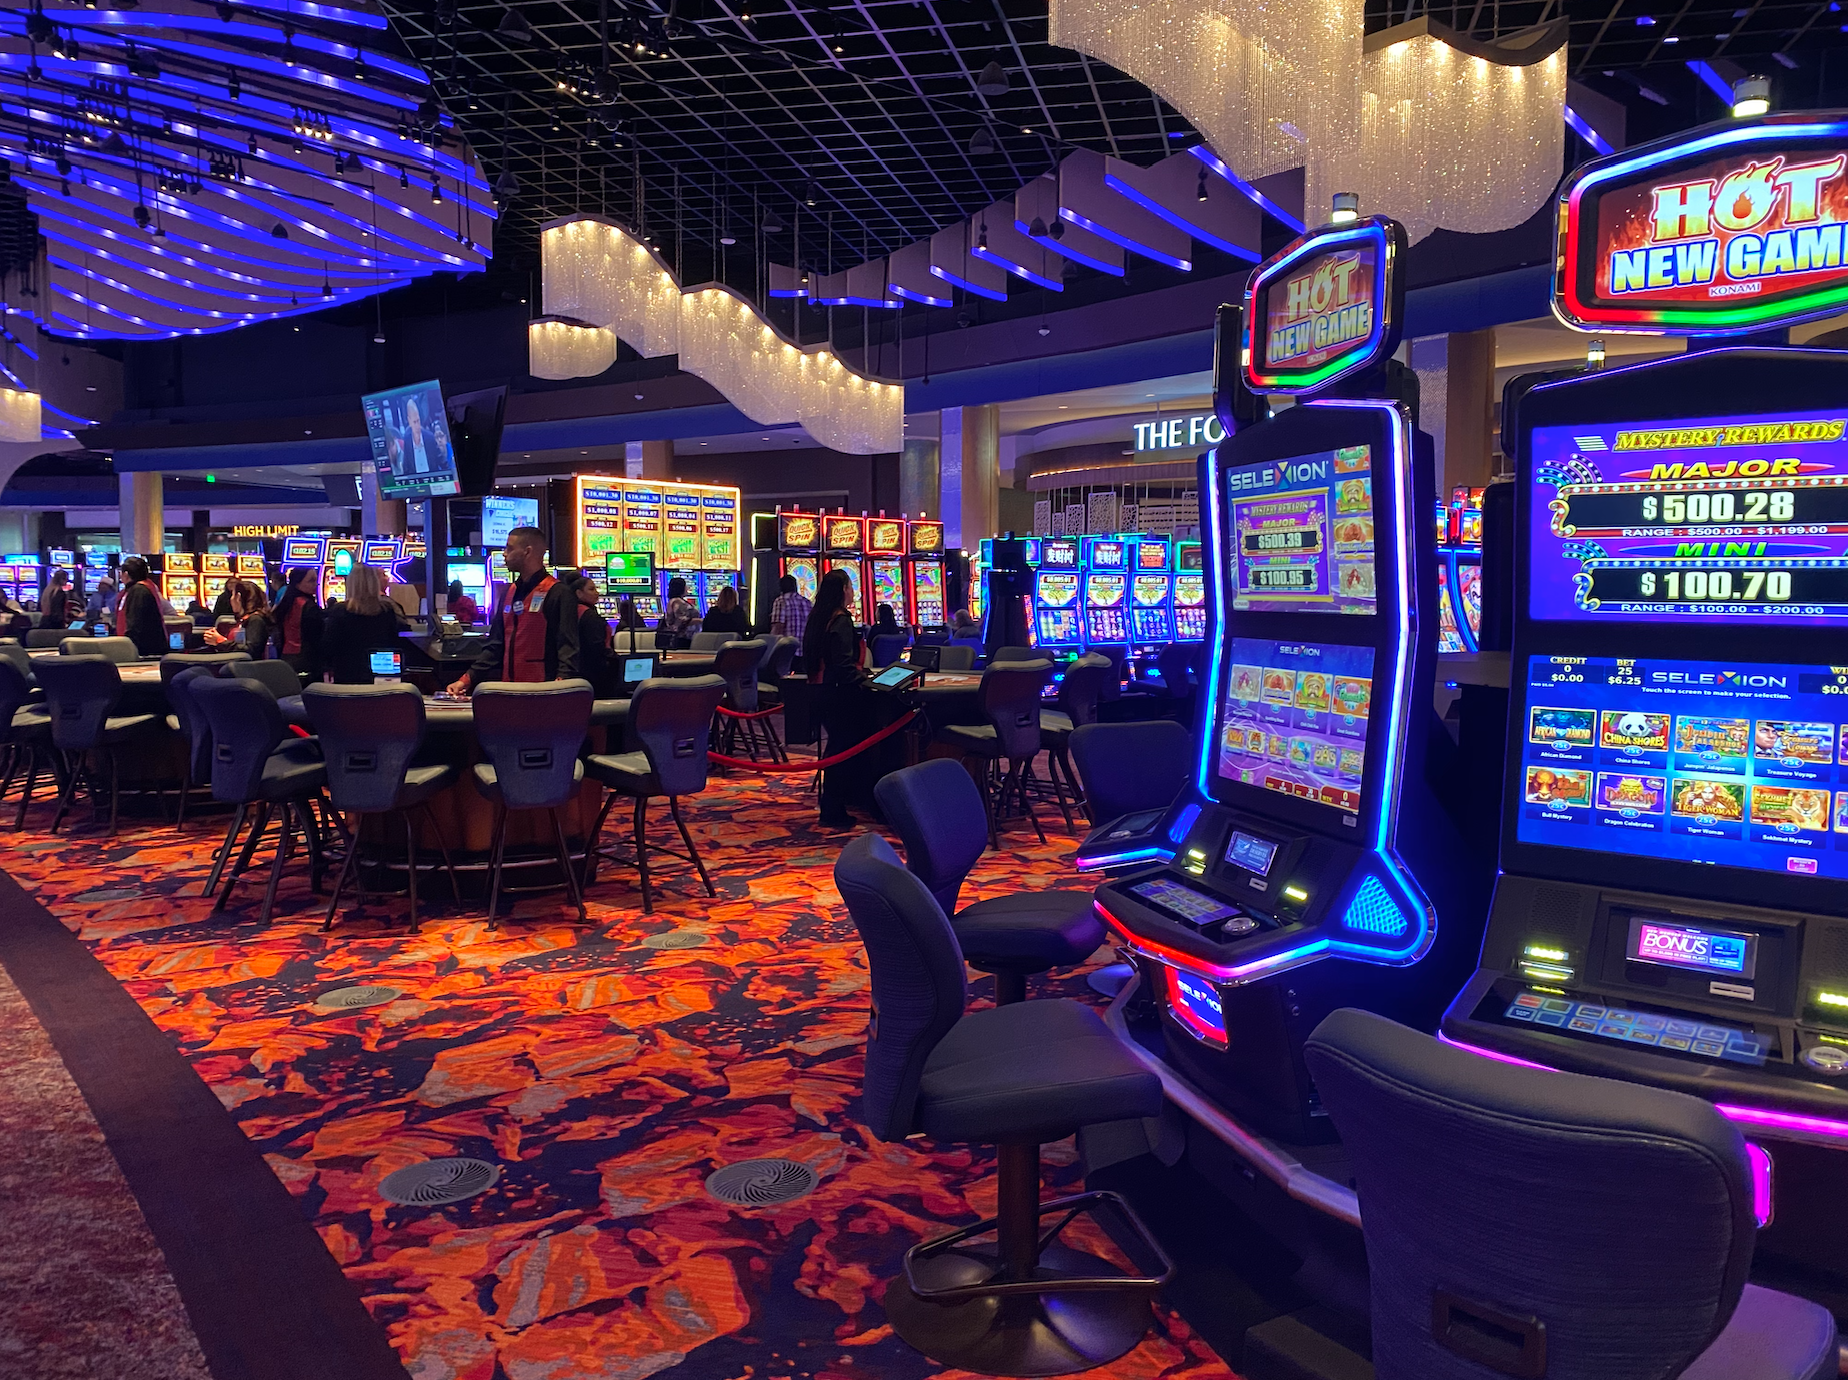 More on Royal Vegas online